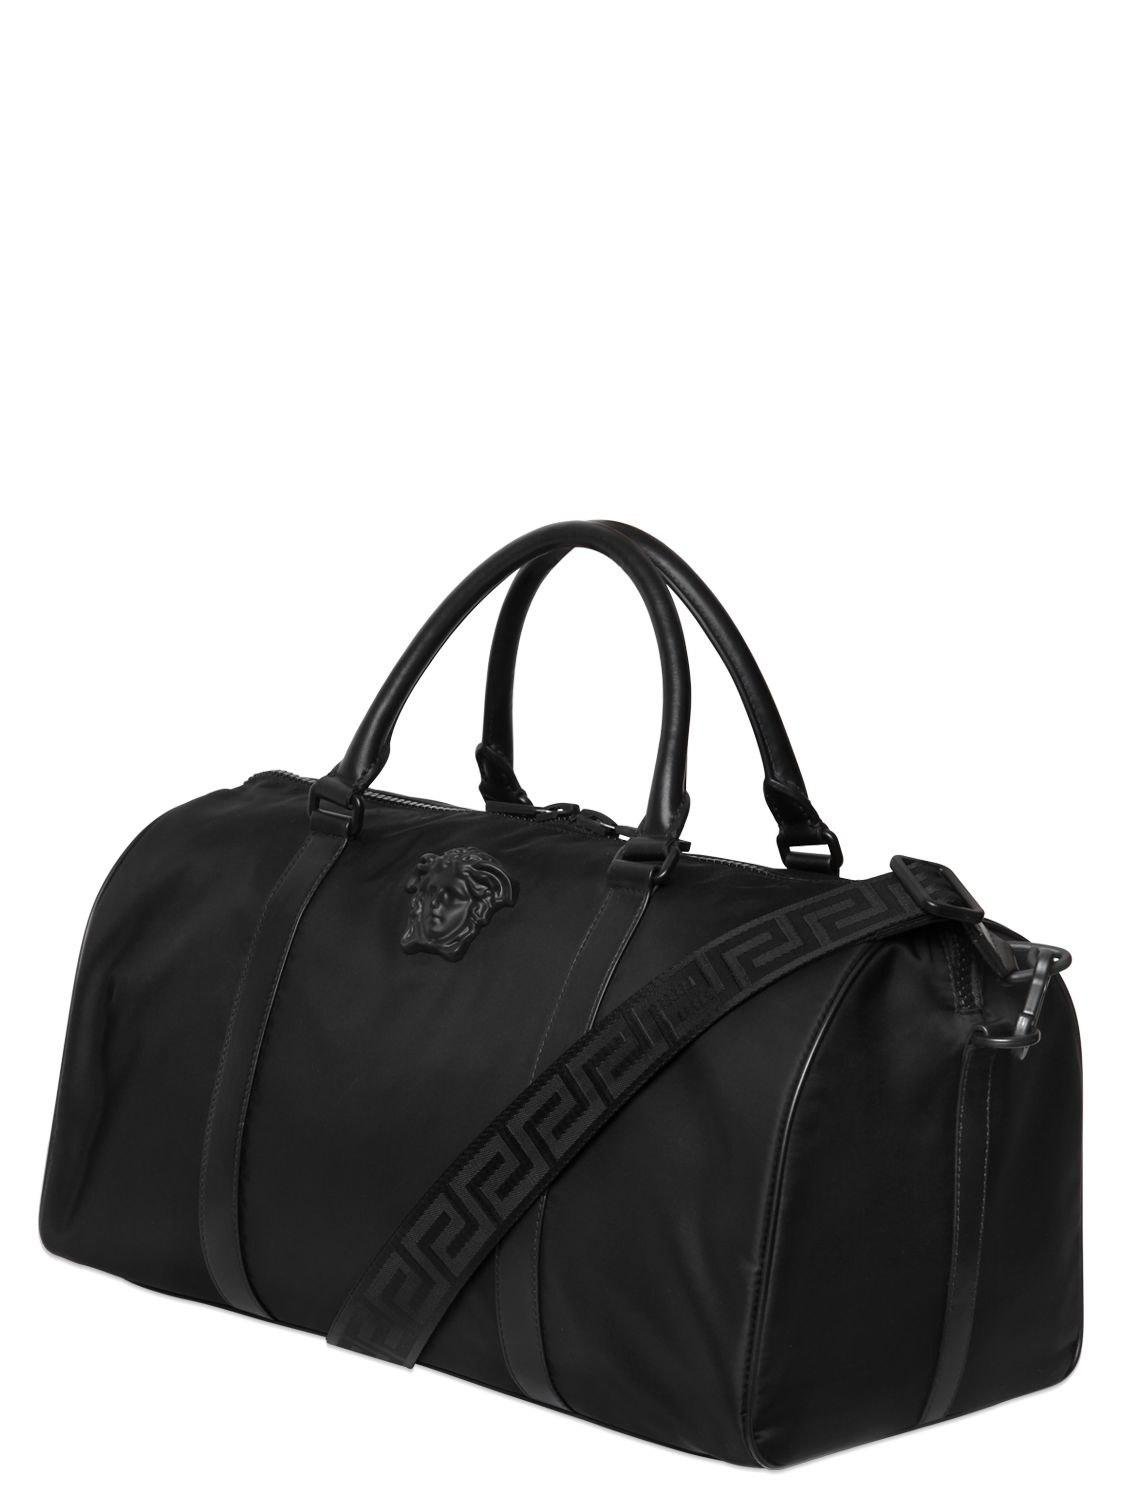 Versace parfums men black duffle travel bag weekender Medusa Logo NEW ...